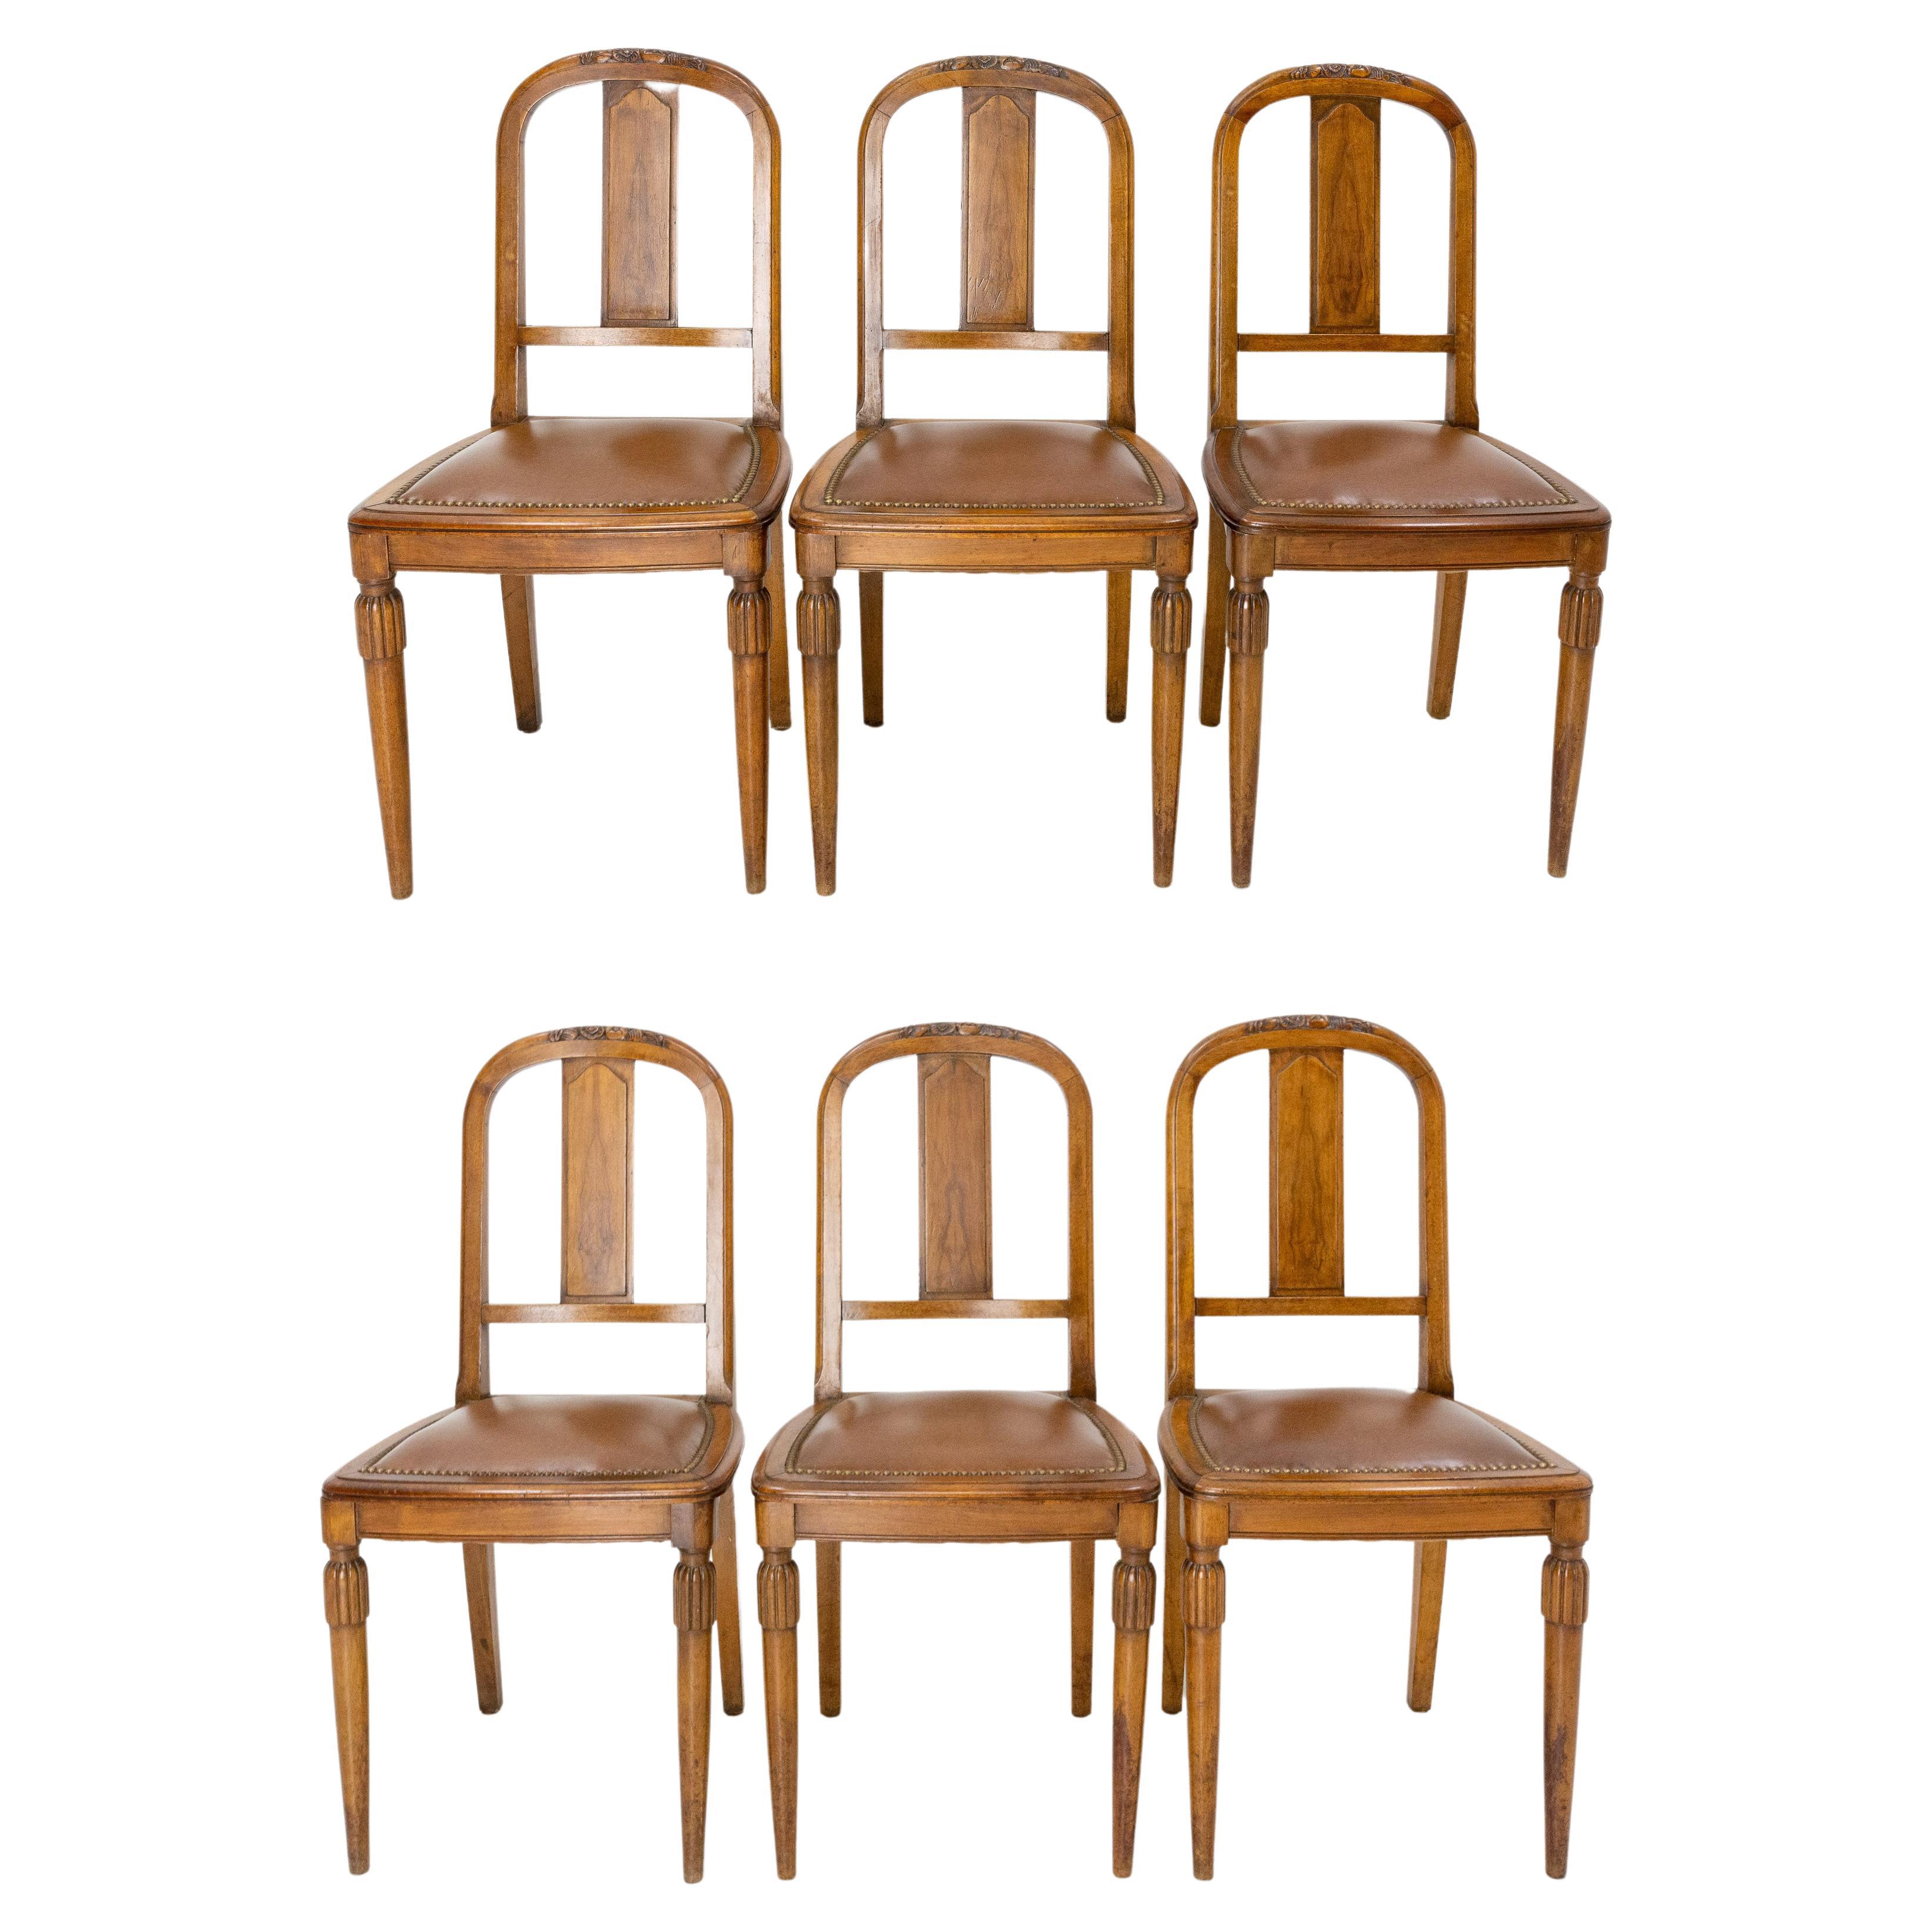 Six Art Deco Dining Walnut and Skai Chairs, French, circa 1930